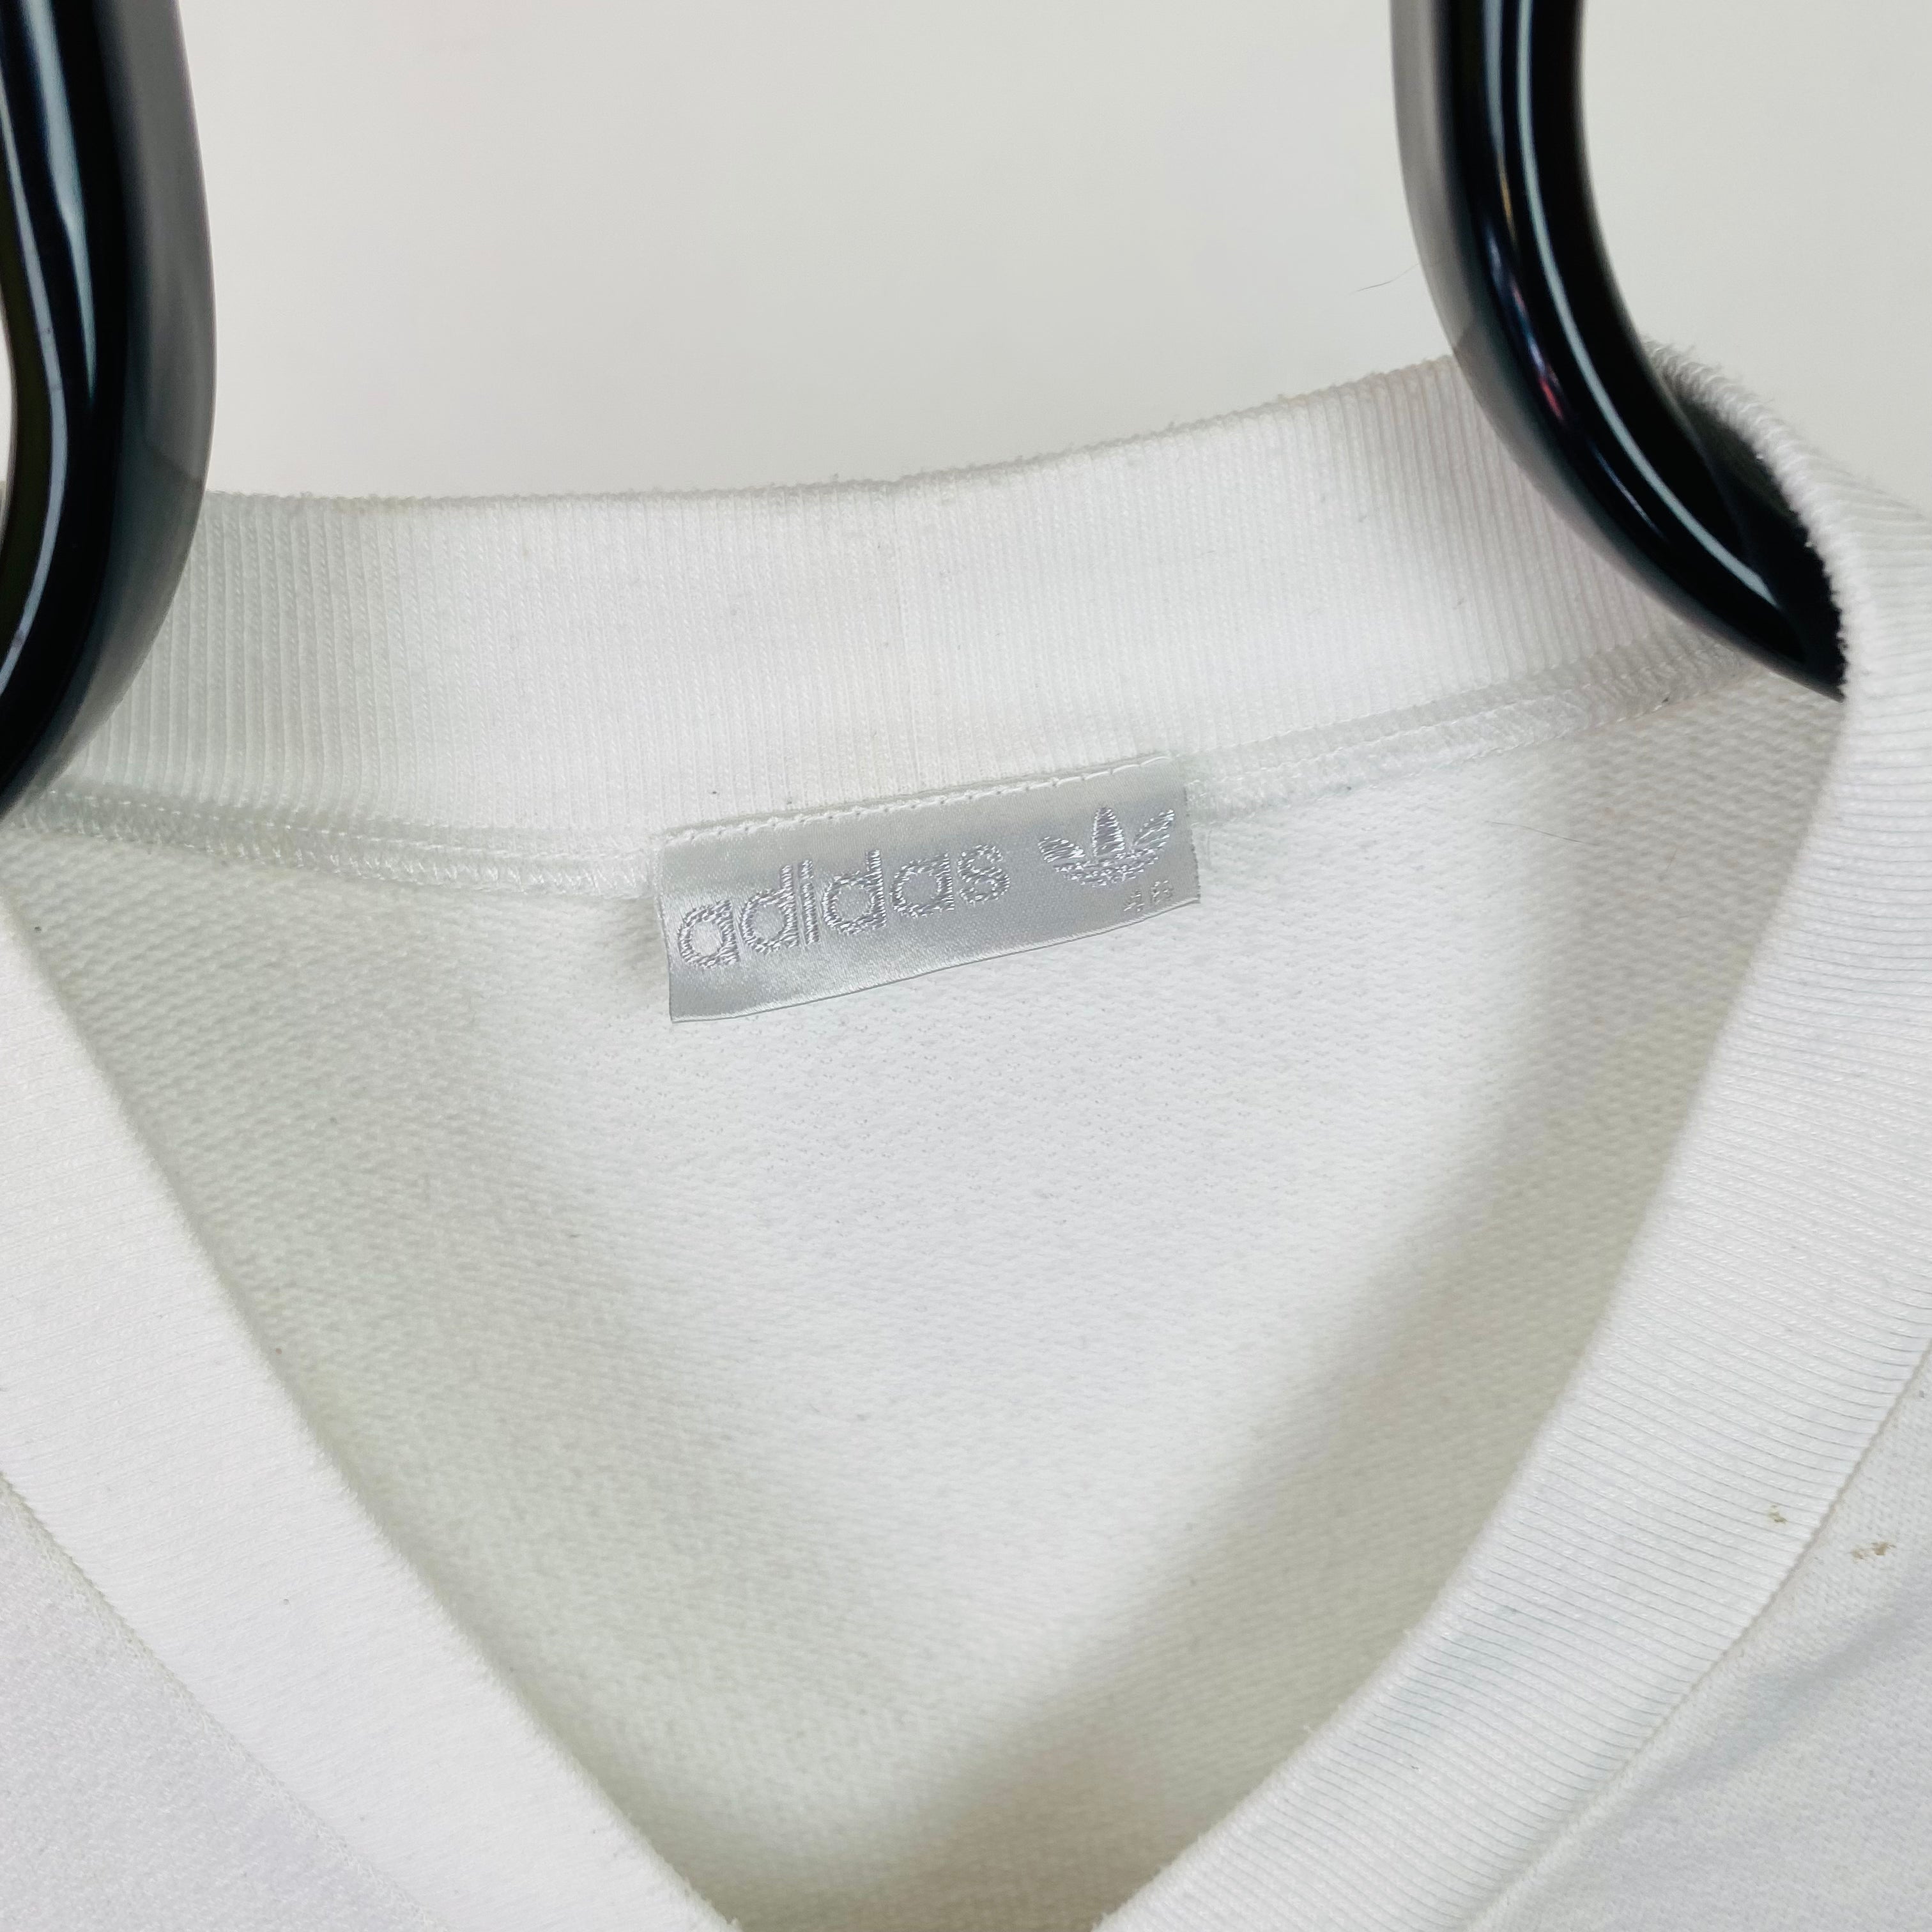 90s Adidas Ivan Lendl Face Sweatshirt White Small/XS